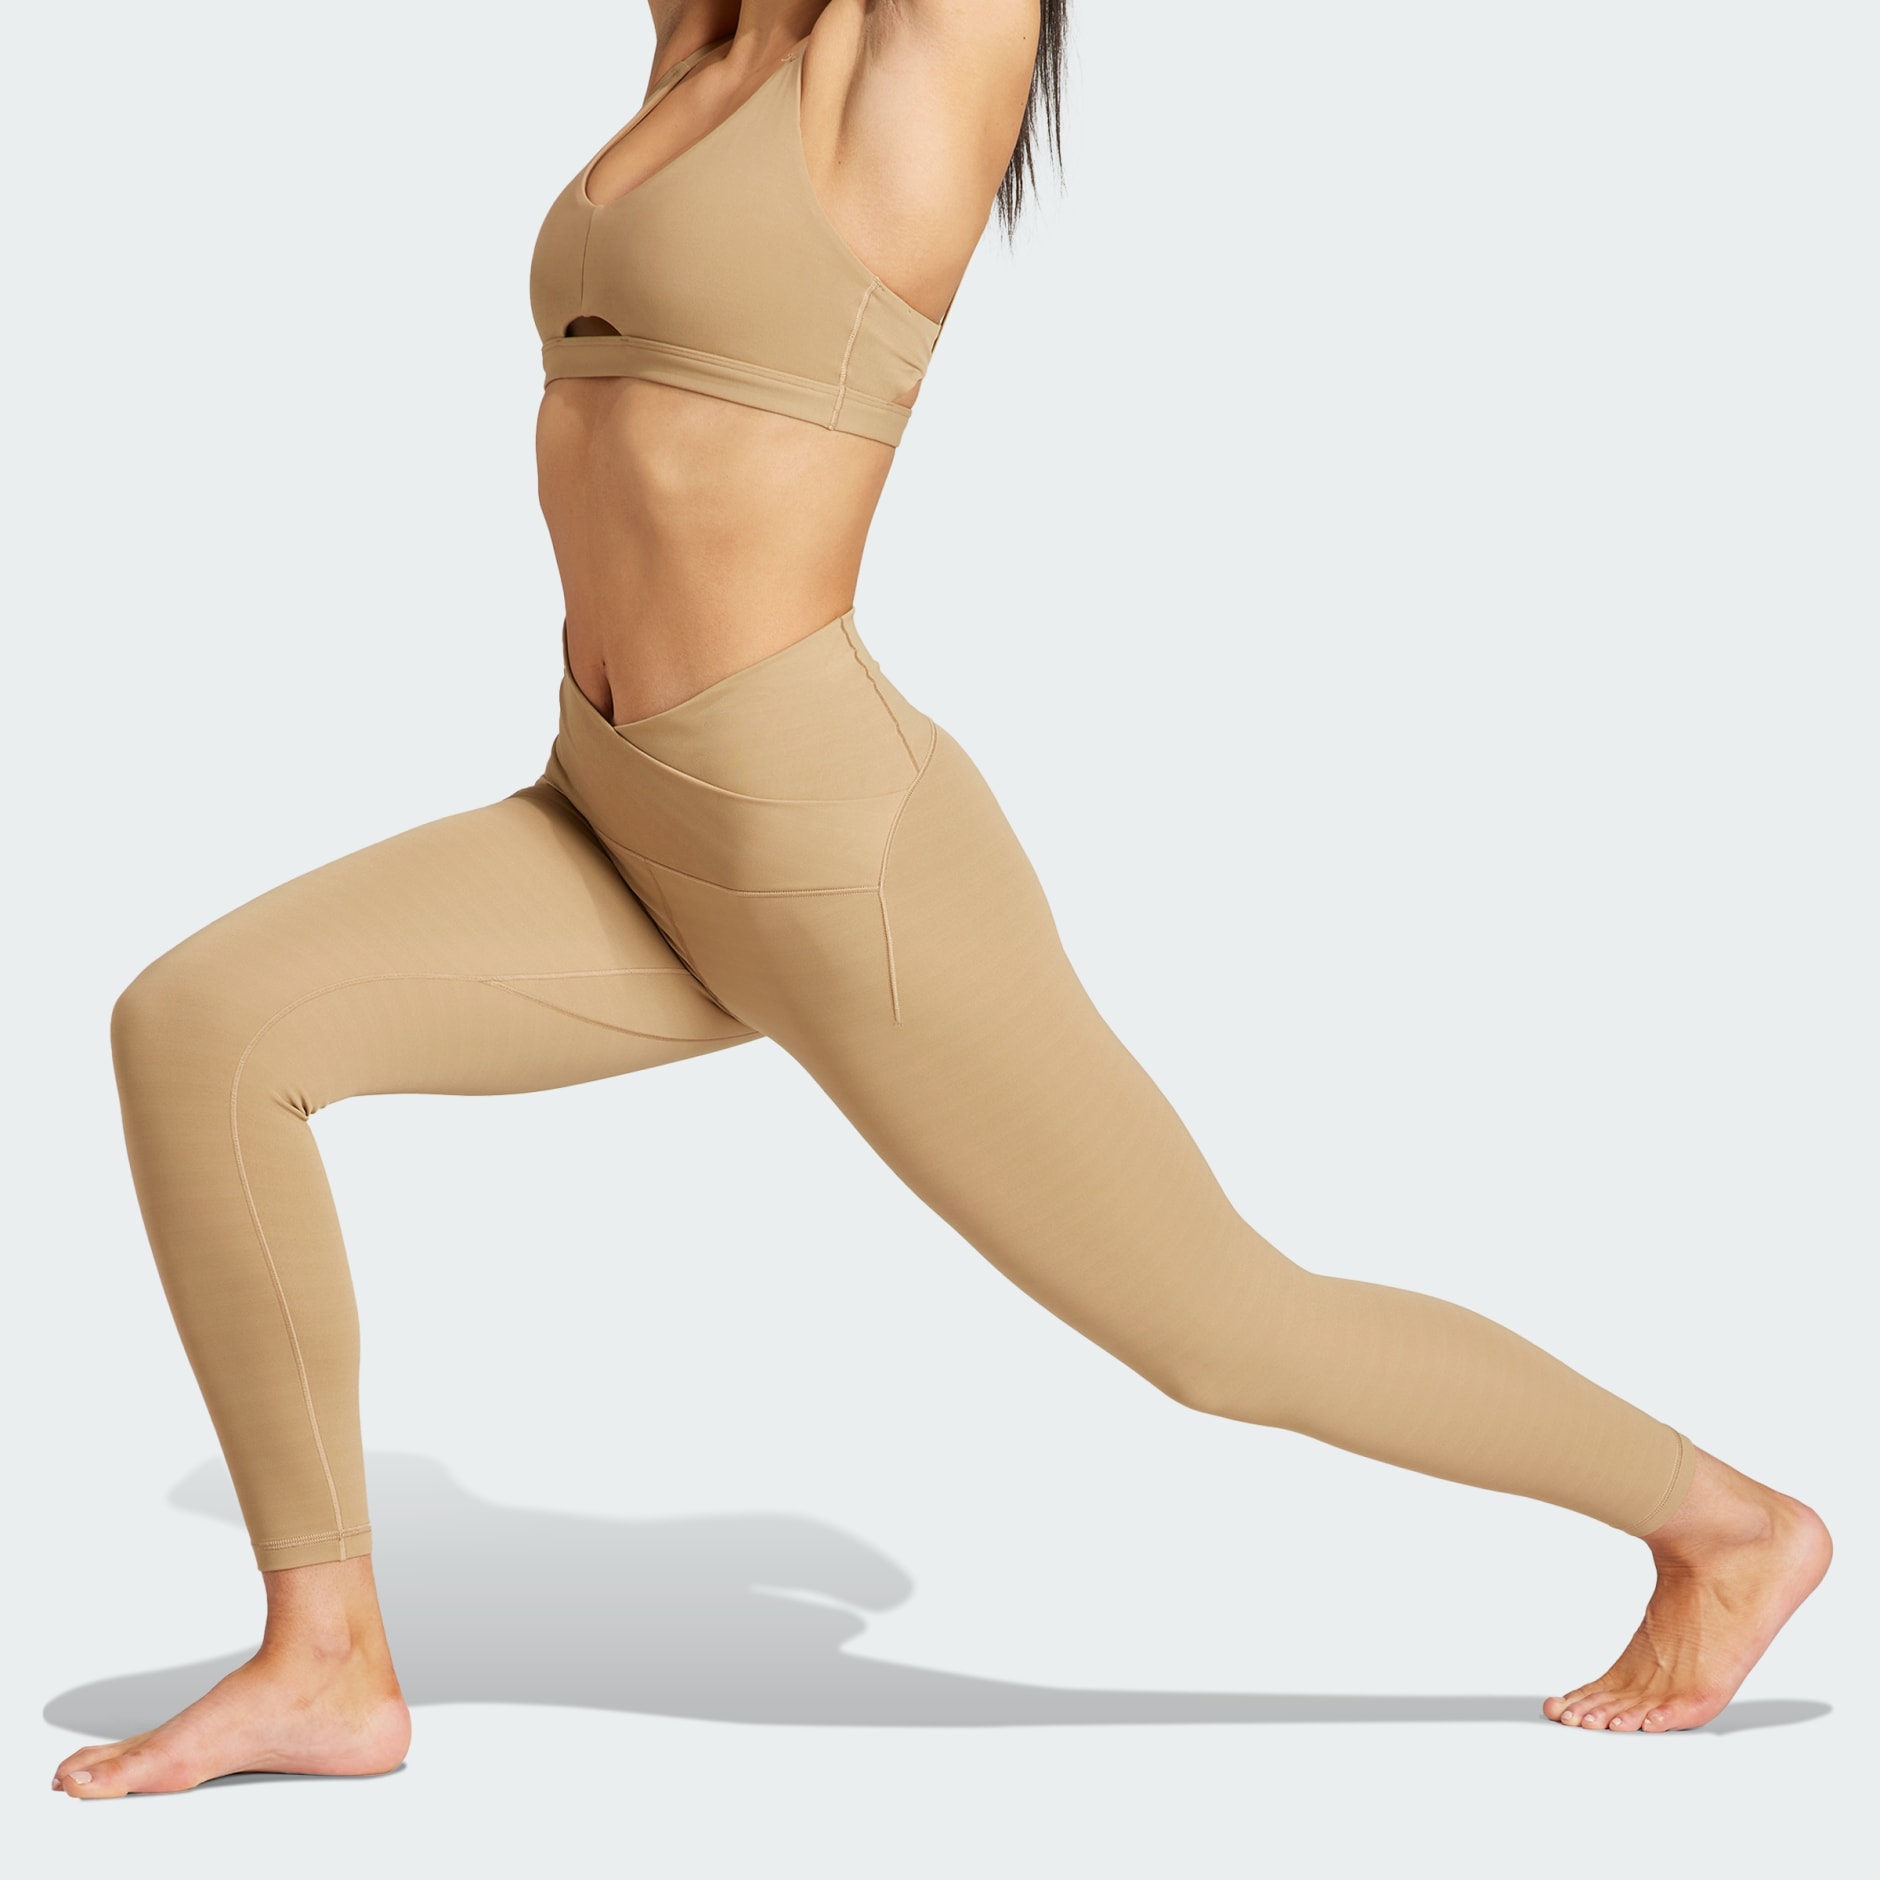 Buy adidas Womens Yoga Studio Aeroready Gathered 7/8 Tight